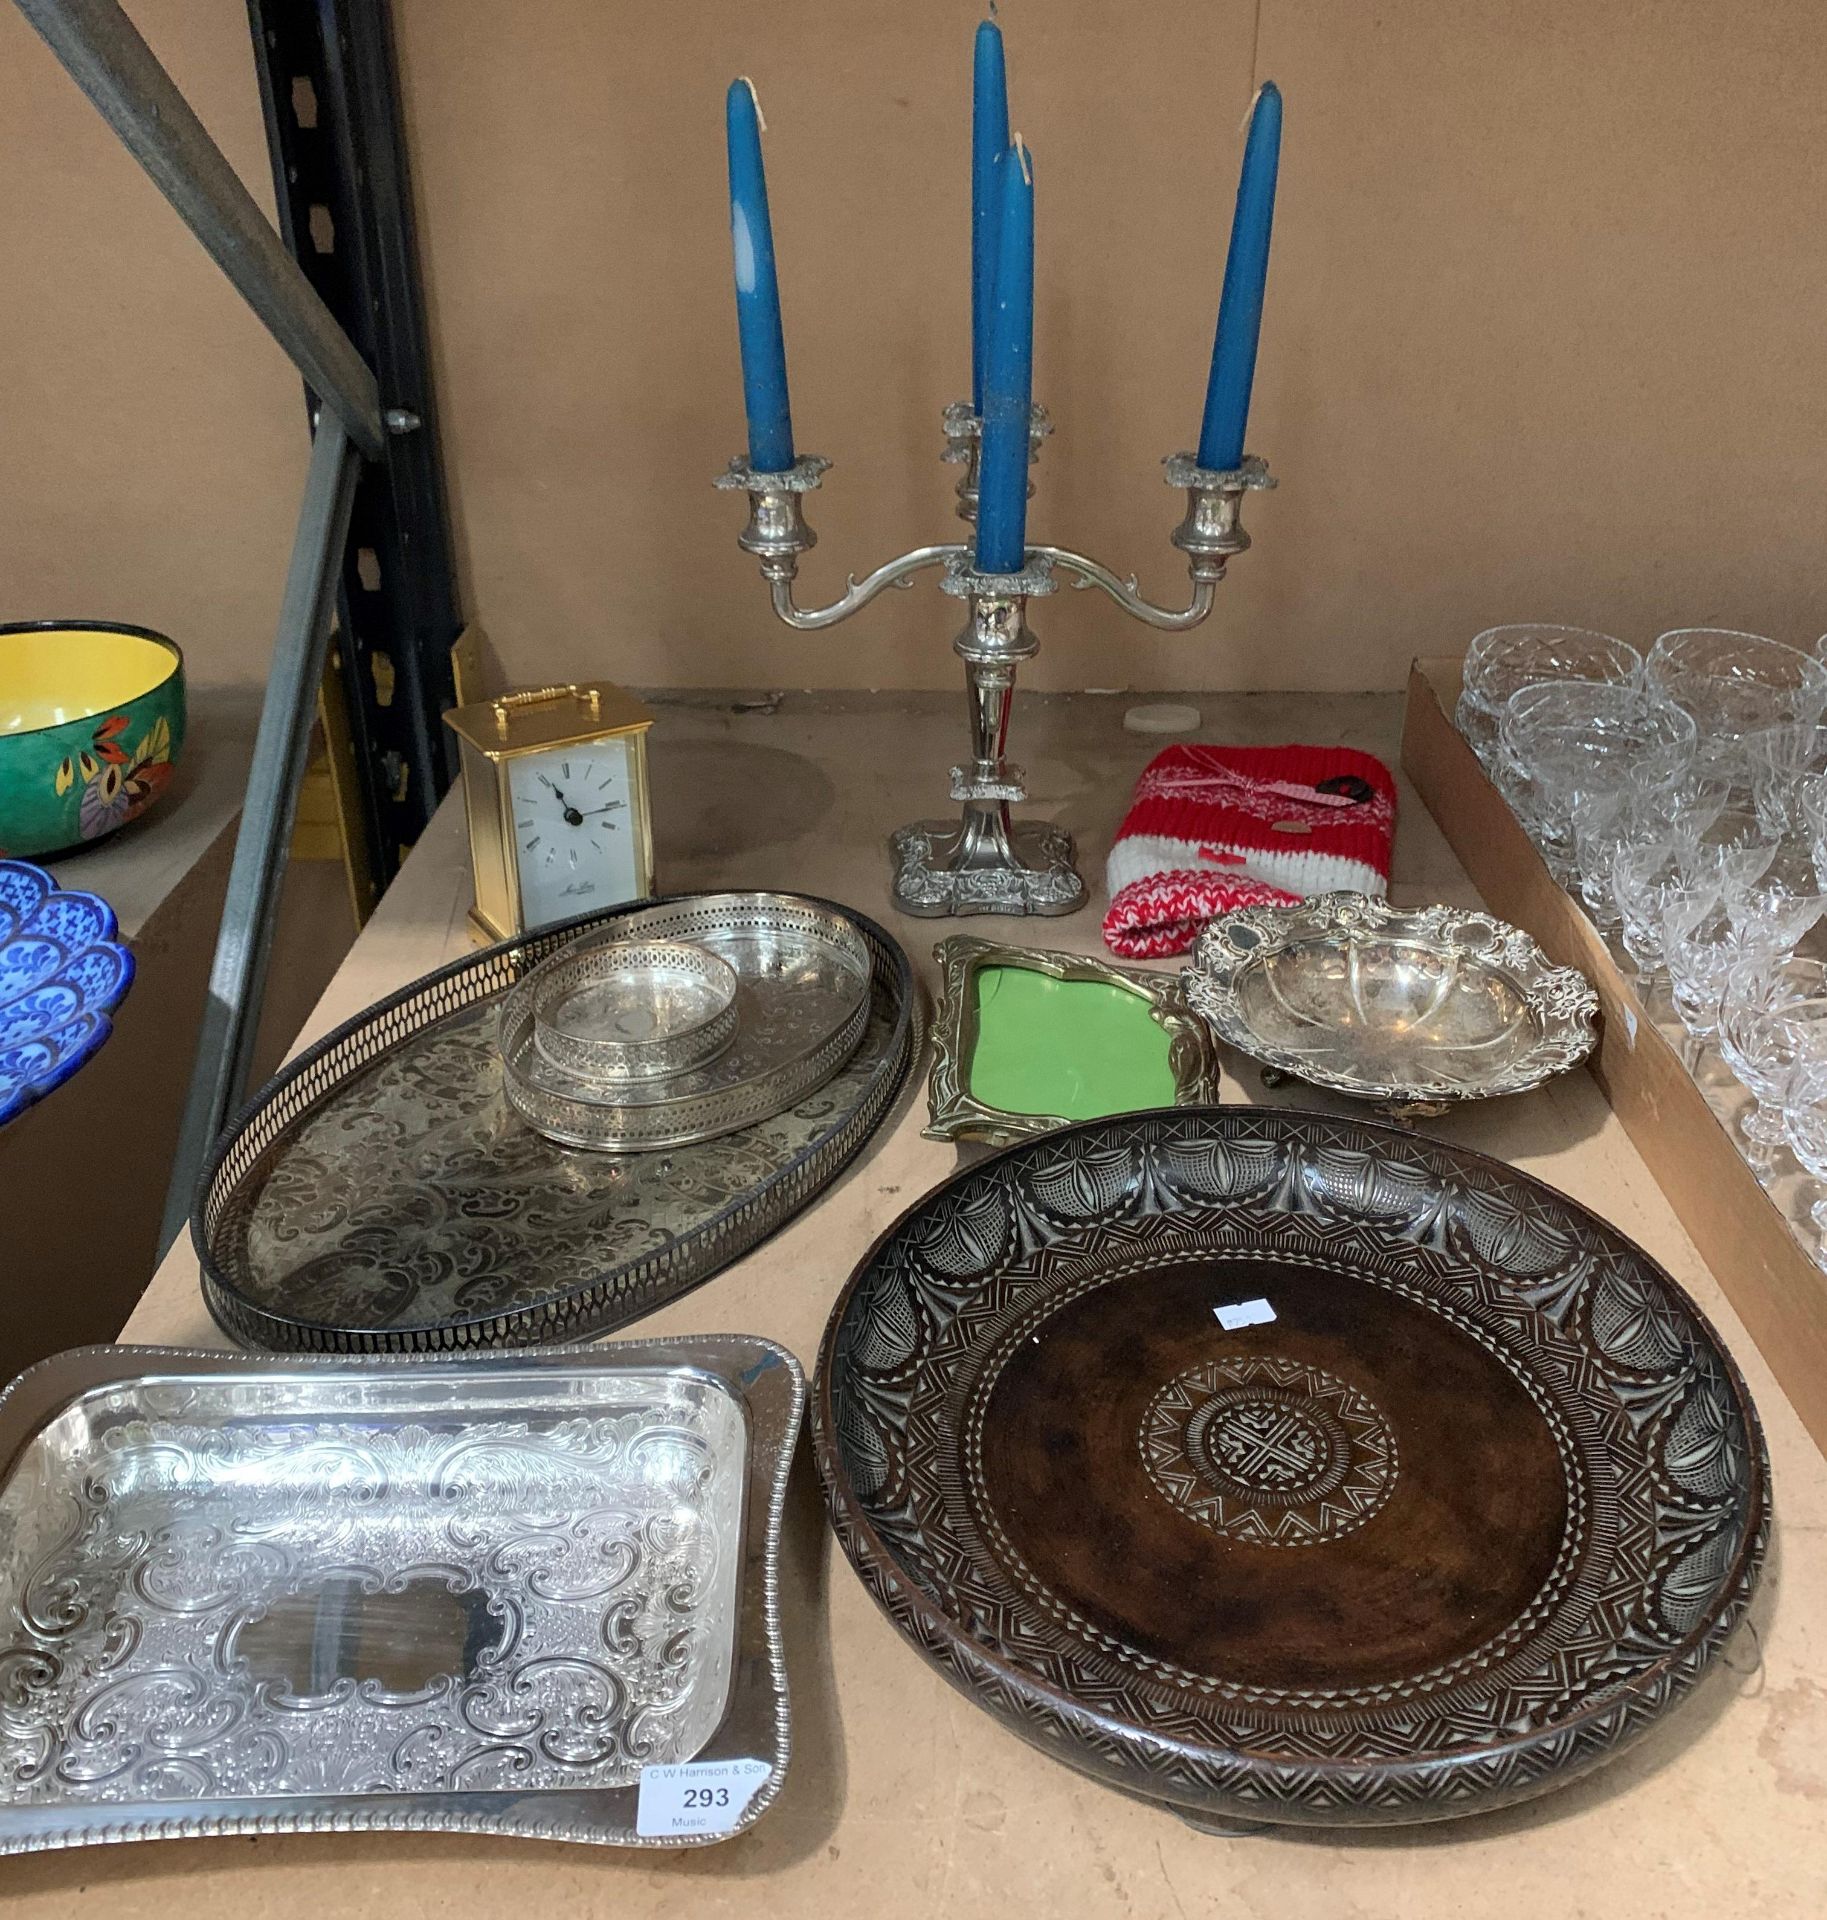 Metalware, African style fruit bowl, brass mantel clock, candelabra, photo frame,